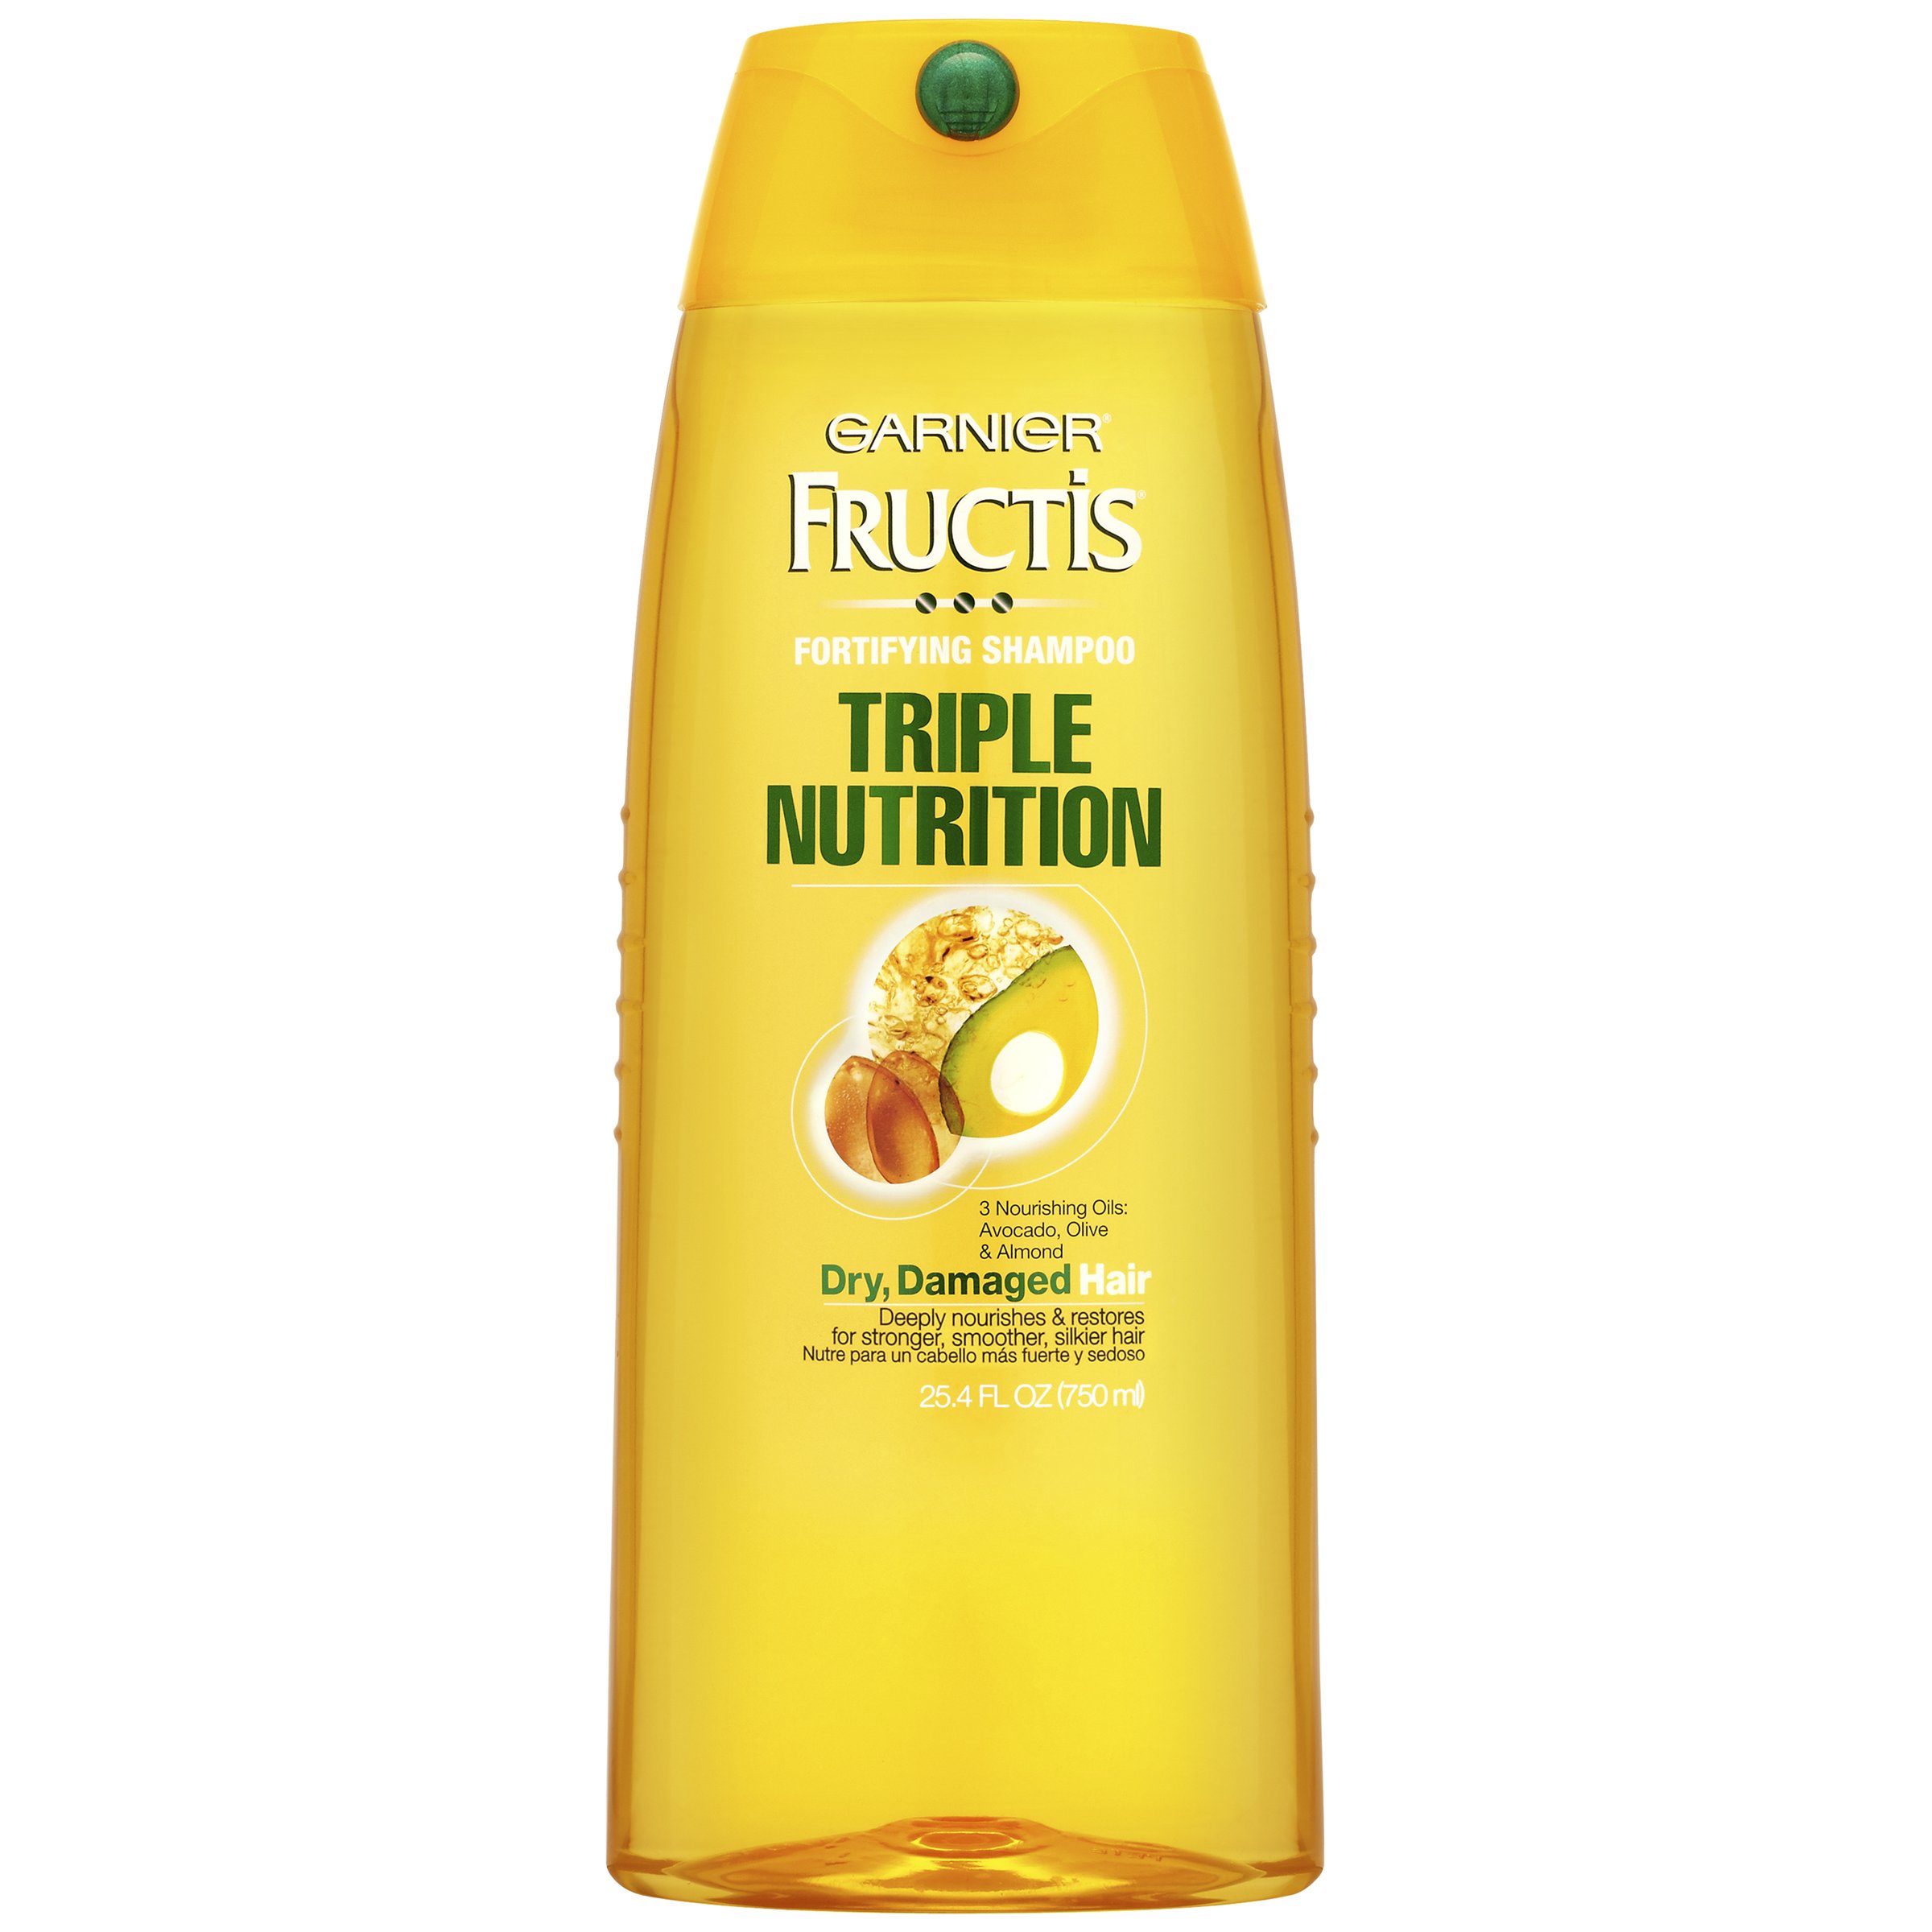 Garnier Fructis Triple Nutrition Fortifying Shampoo for Dry Damaged Hair - Shop Shampoo & Conditioner H-E-B